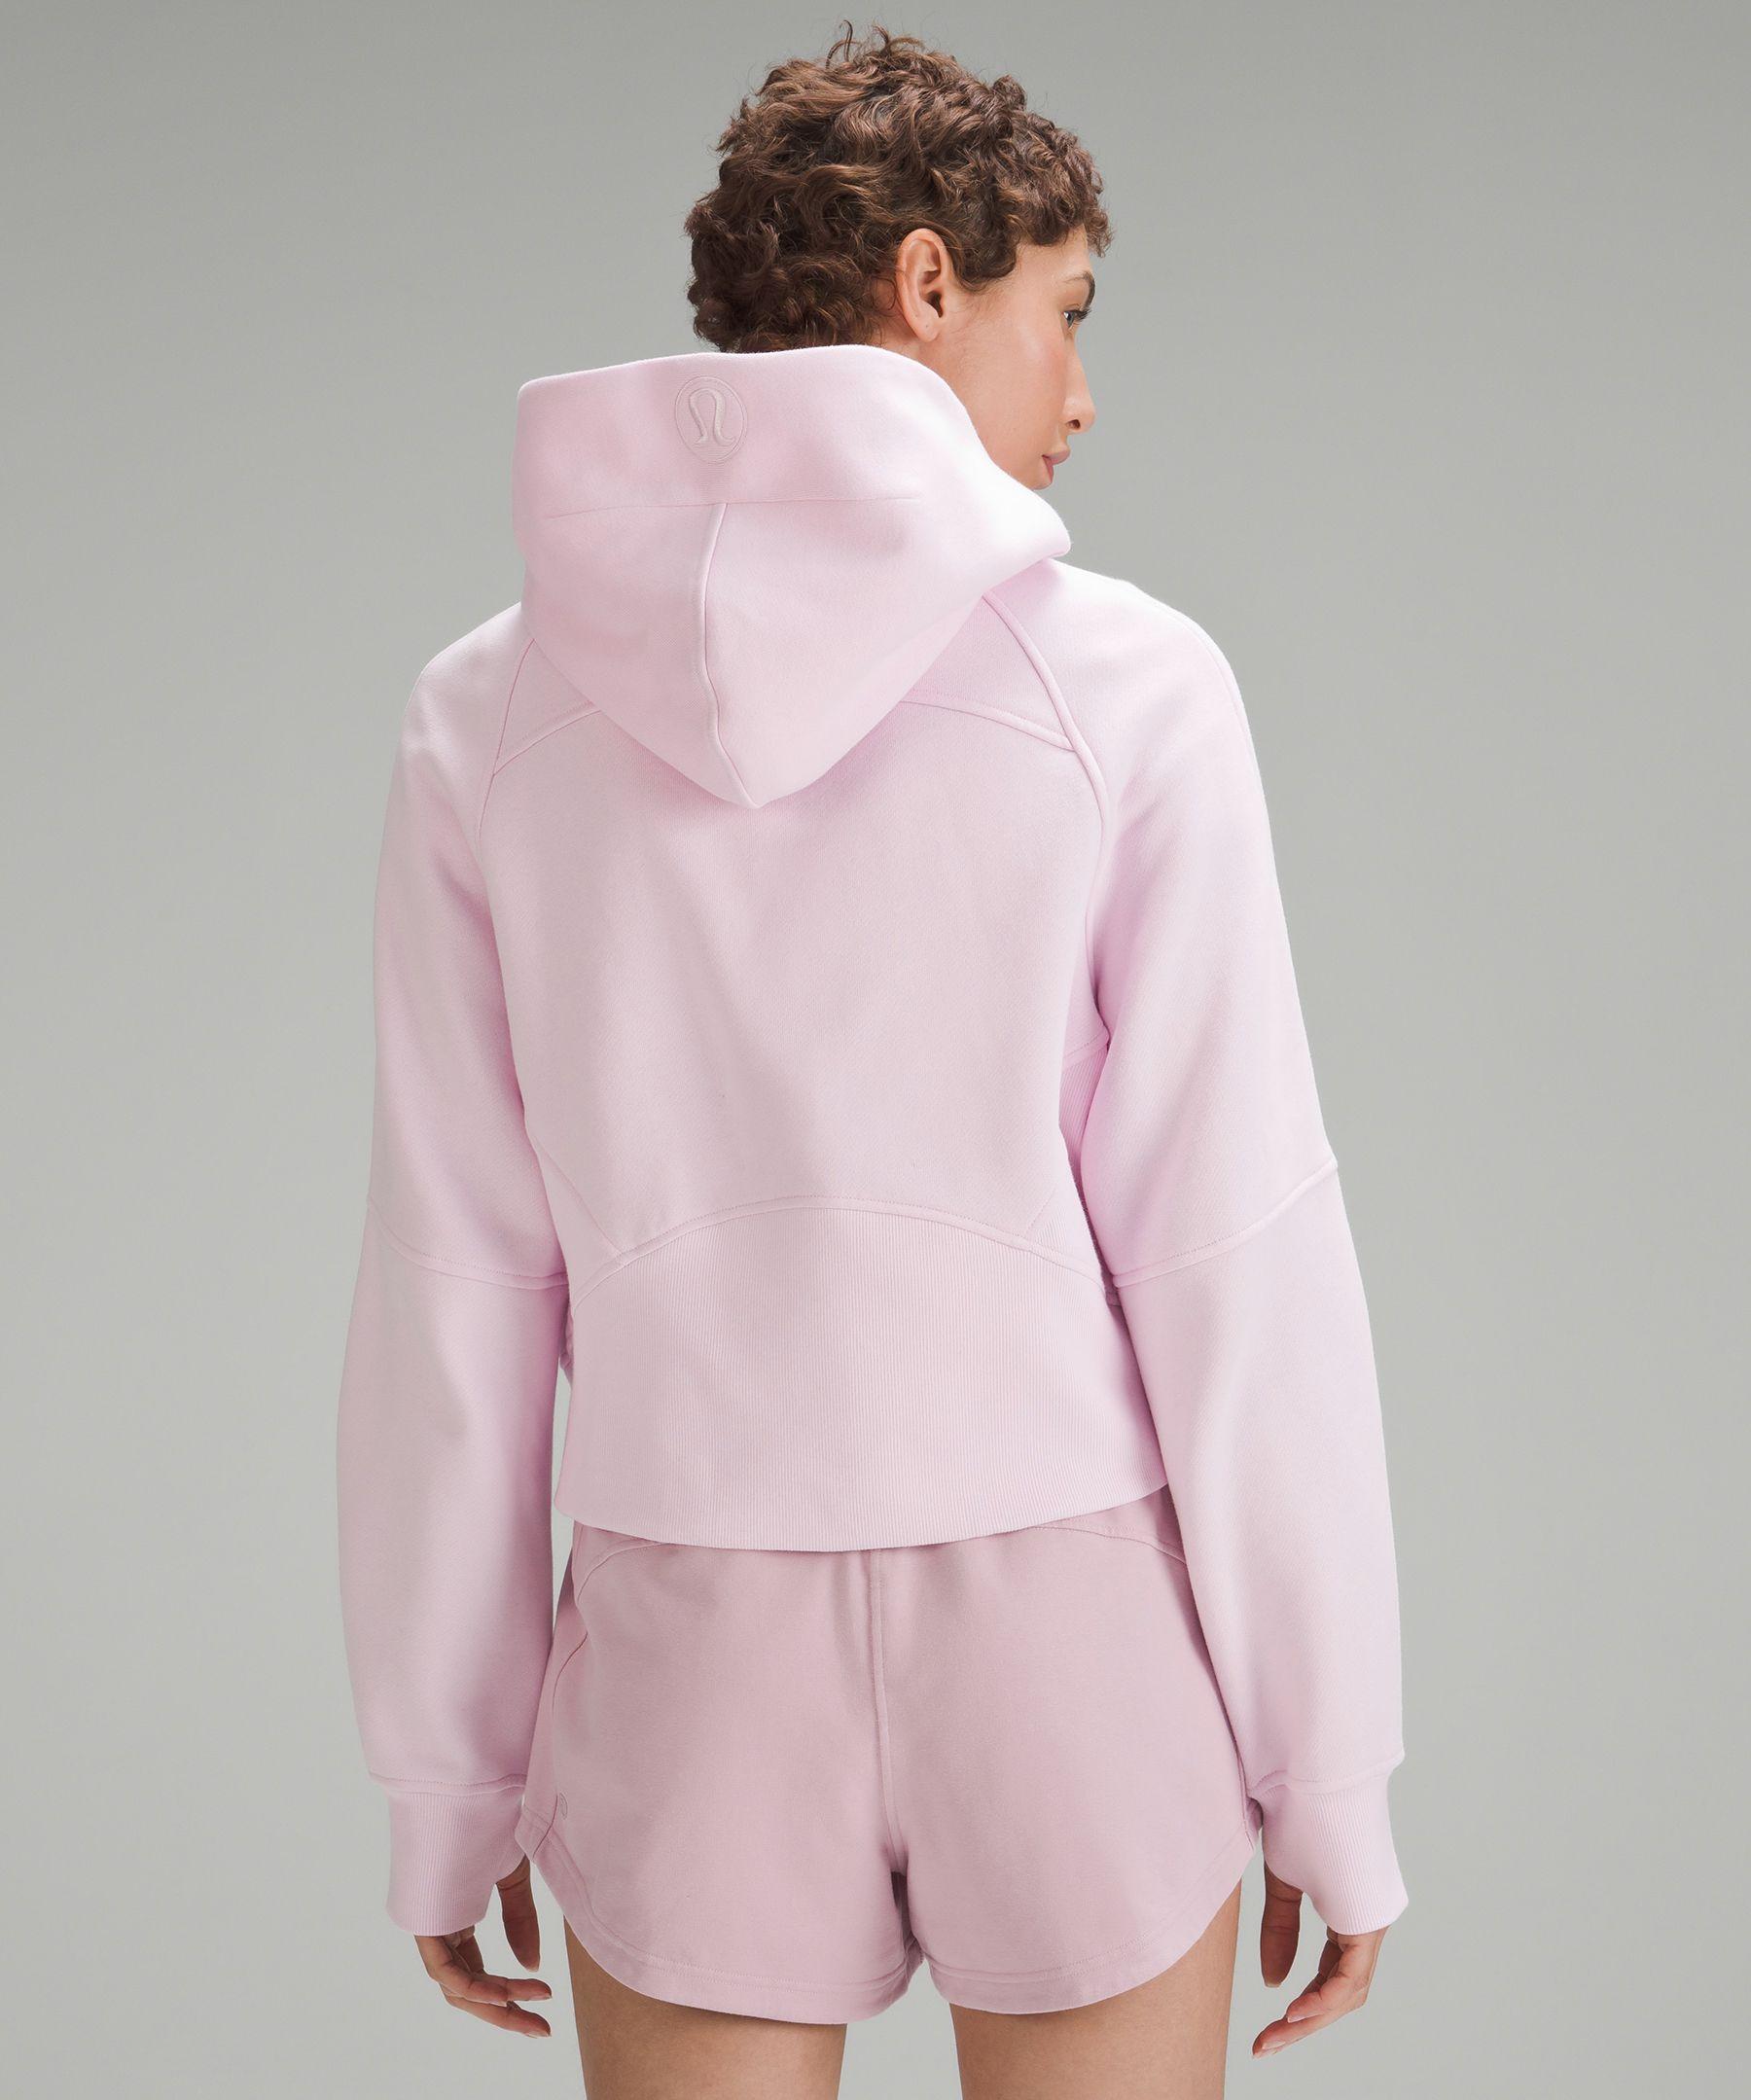 Lululemon Scuba Full Zip Hoodie In Pink Size 4 - $50 (57% Off Retail) -  From ks